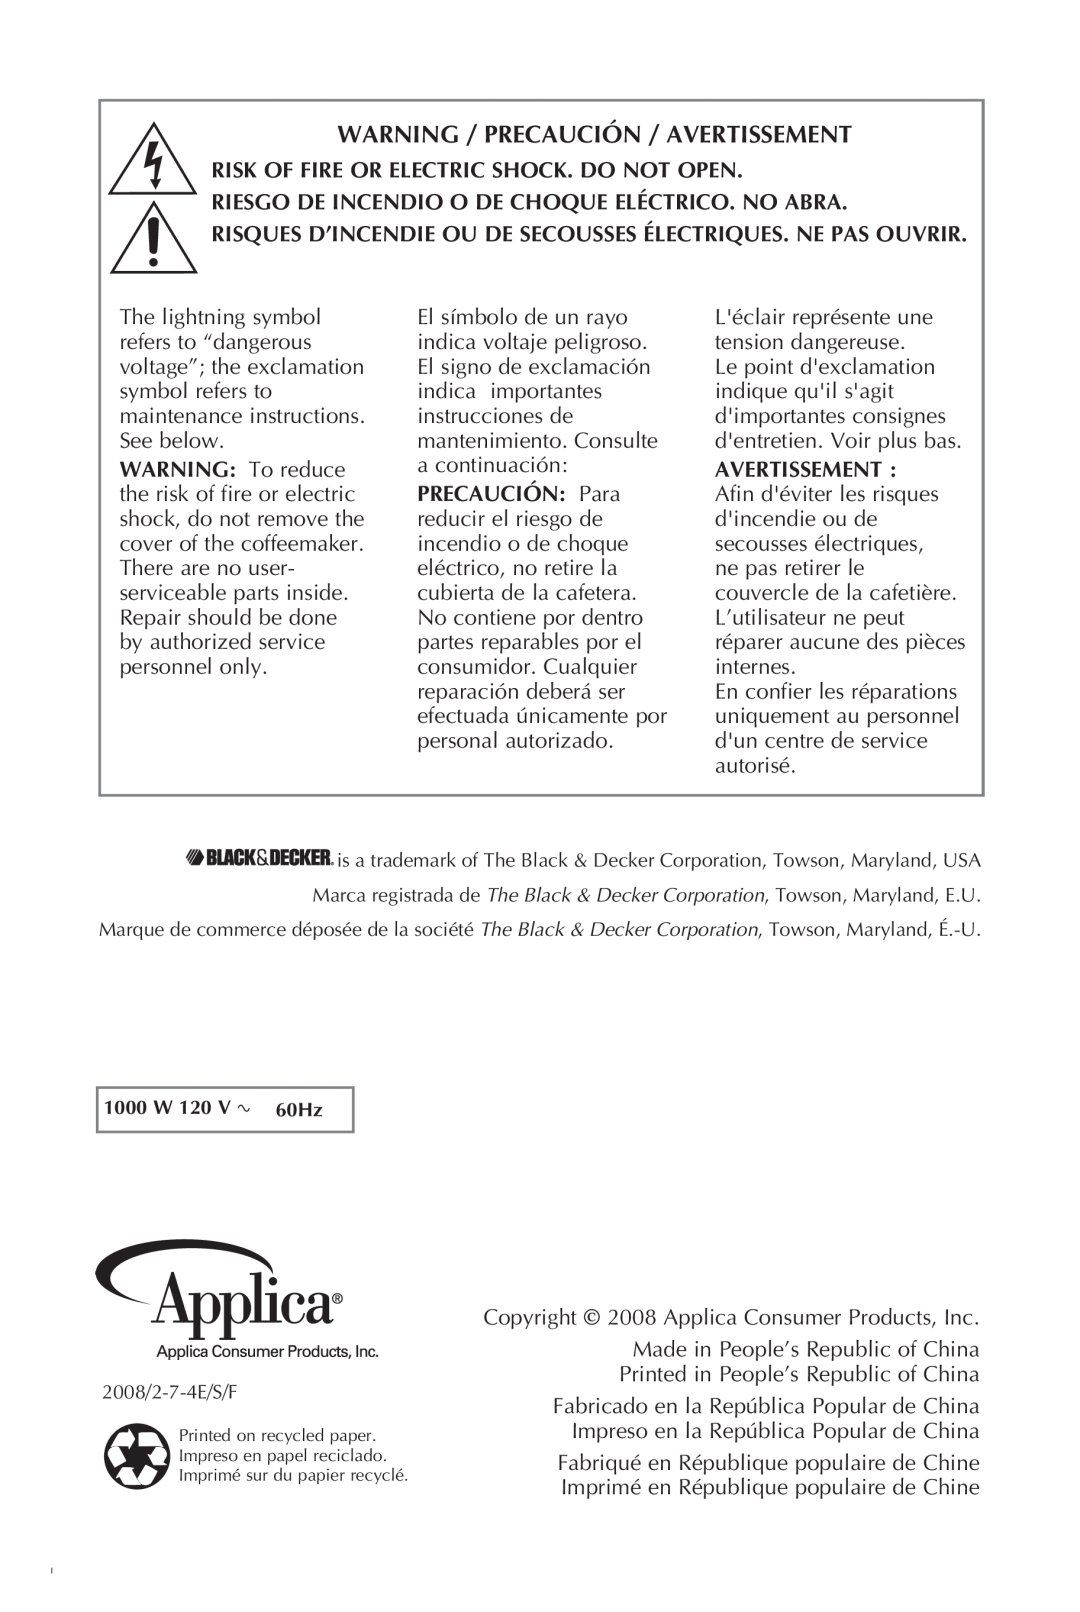 Black & Decker DCM3250B Warning / Precaución / Avertissement, Copyright 2008 Applica Consumer Products, Inc, 1000 W, 60Hz 